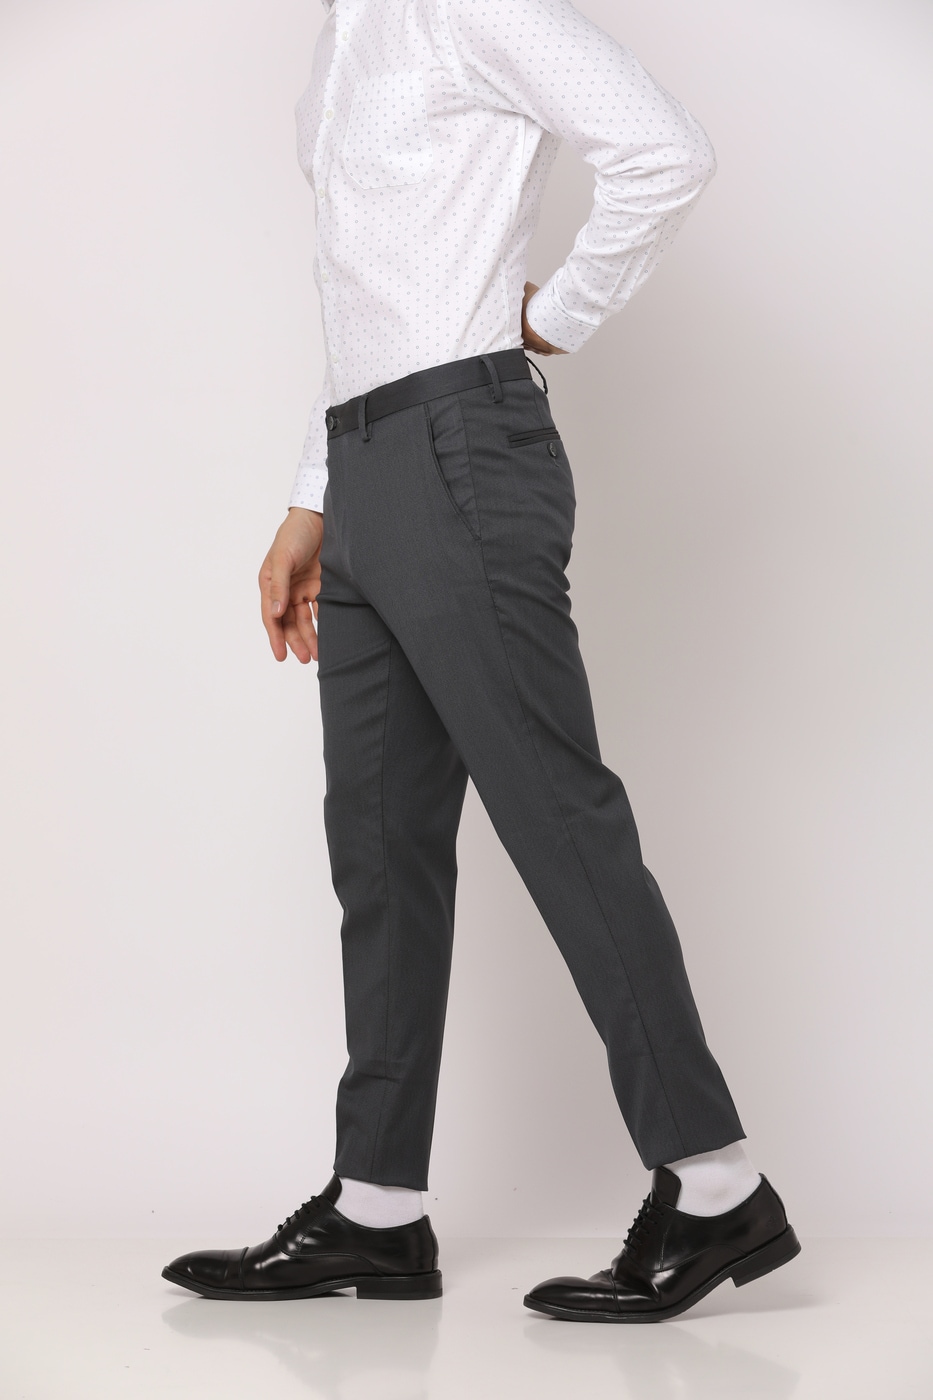 $175 Bar III Men's Black Slim-Fit Plaid Suit Trousers Dress Pants 30W X 30L  | eBay